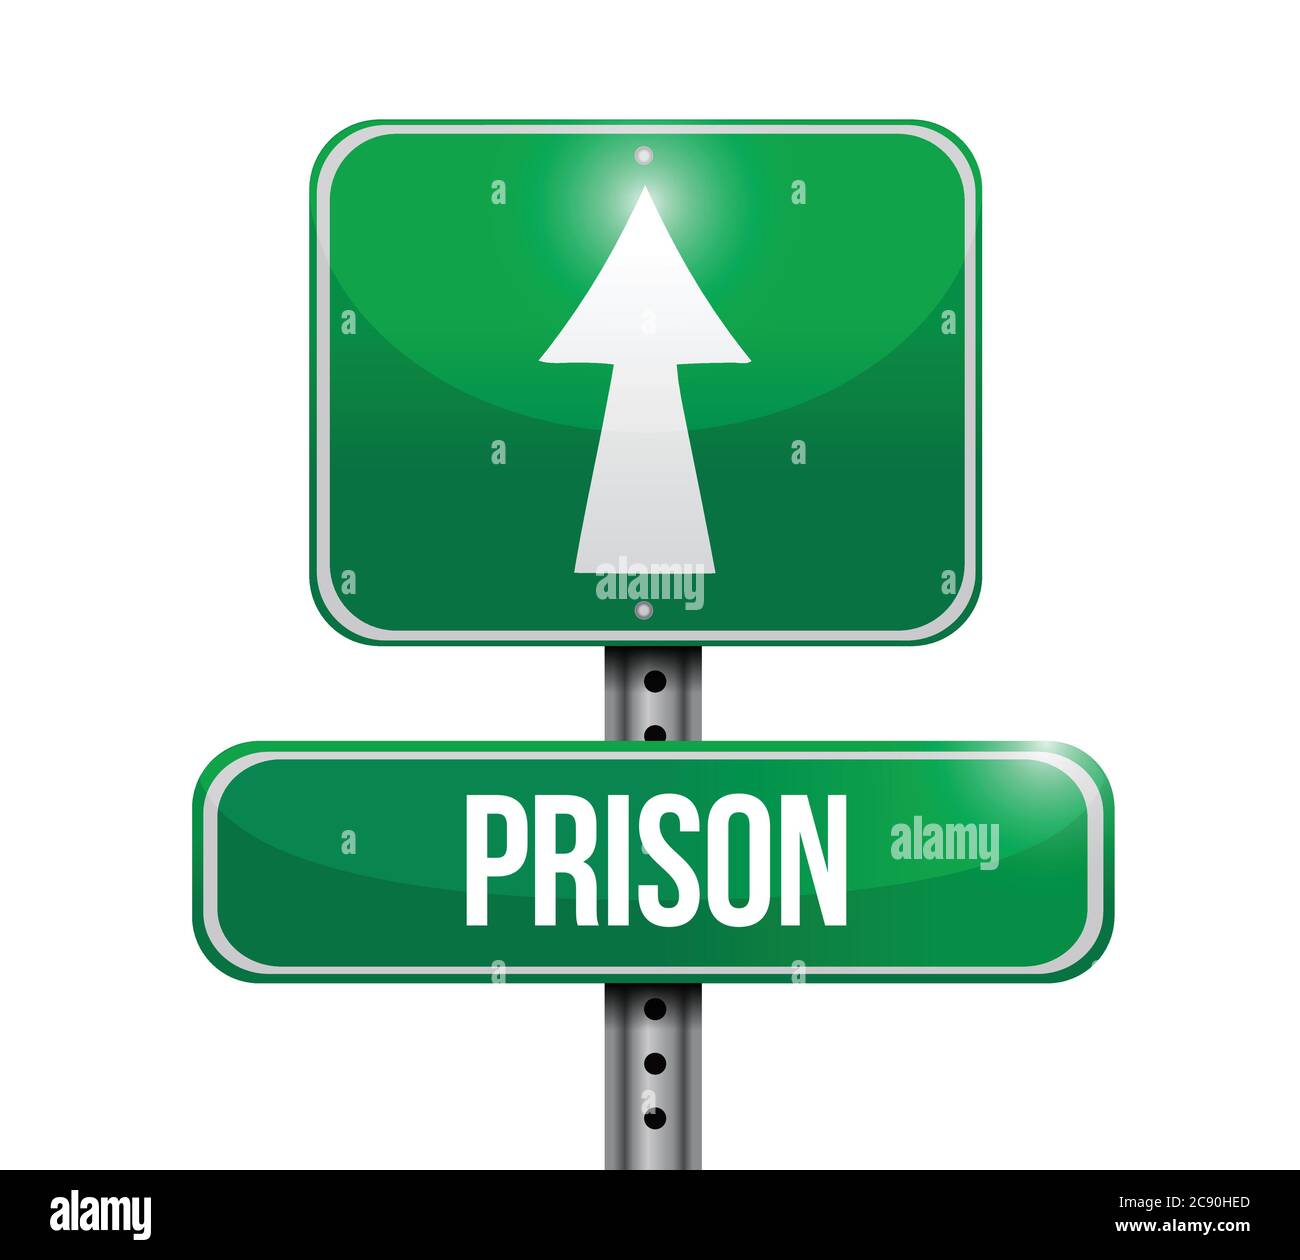 Prison street sign illustration design over a white background Stock Vector